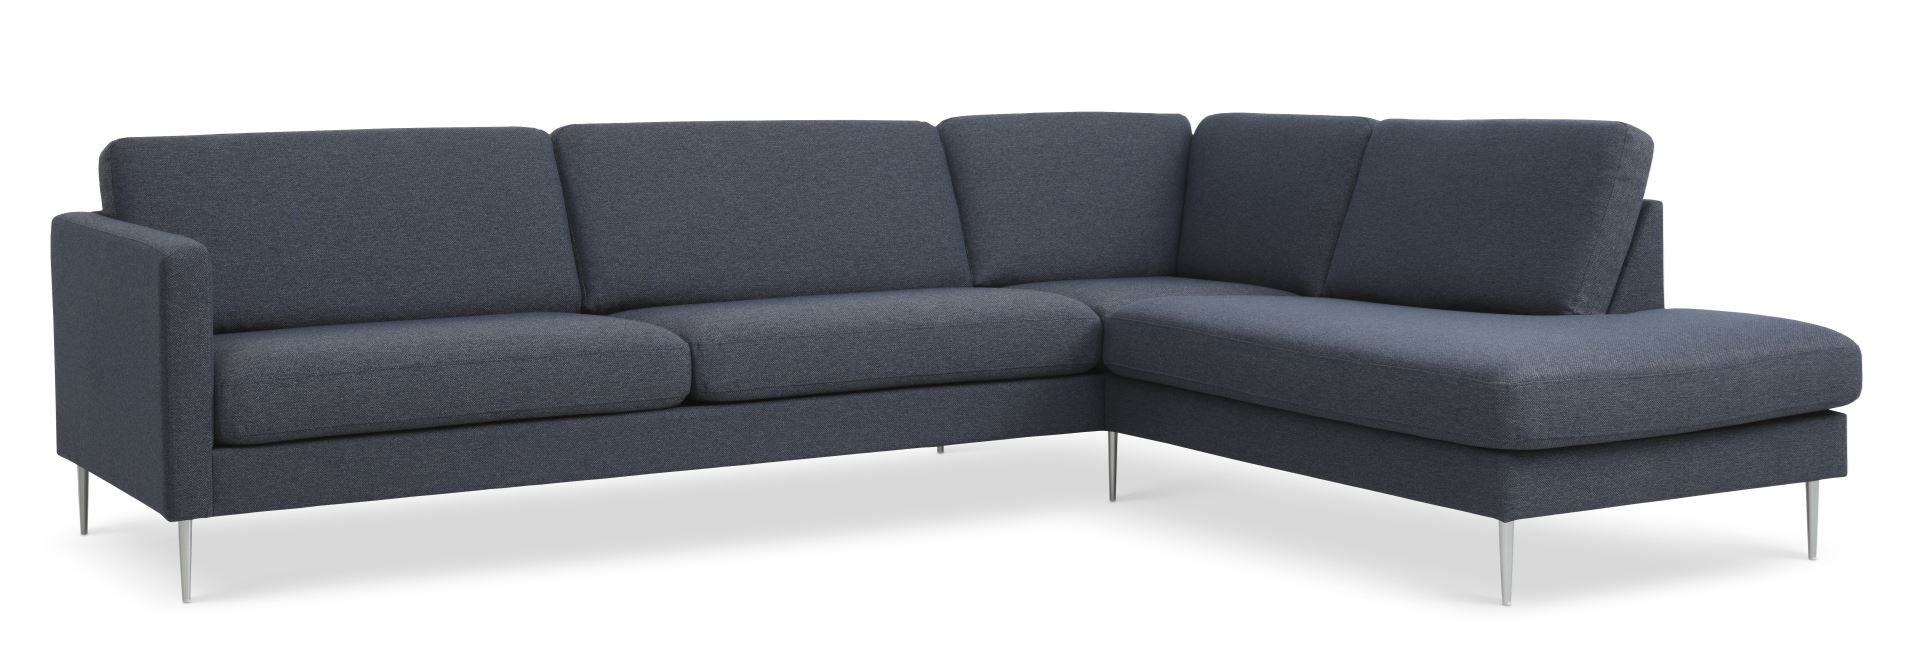 Ask sæt 61 stor OE sofa, m. højre chaiselong - navy blåt polyester stof og børstet aluminium